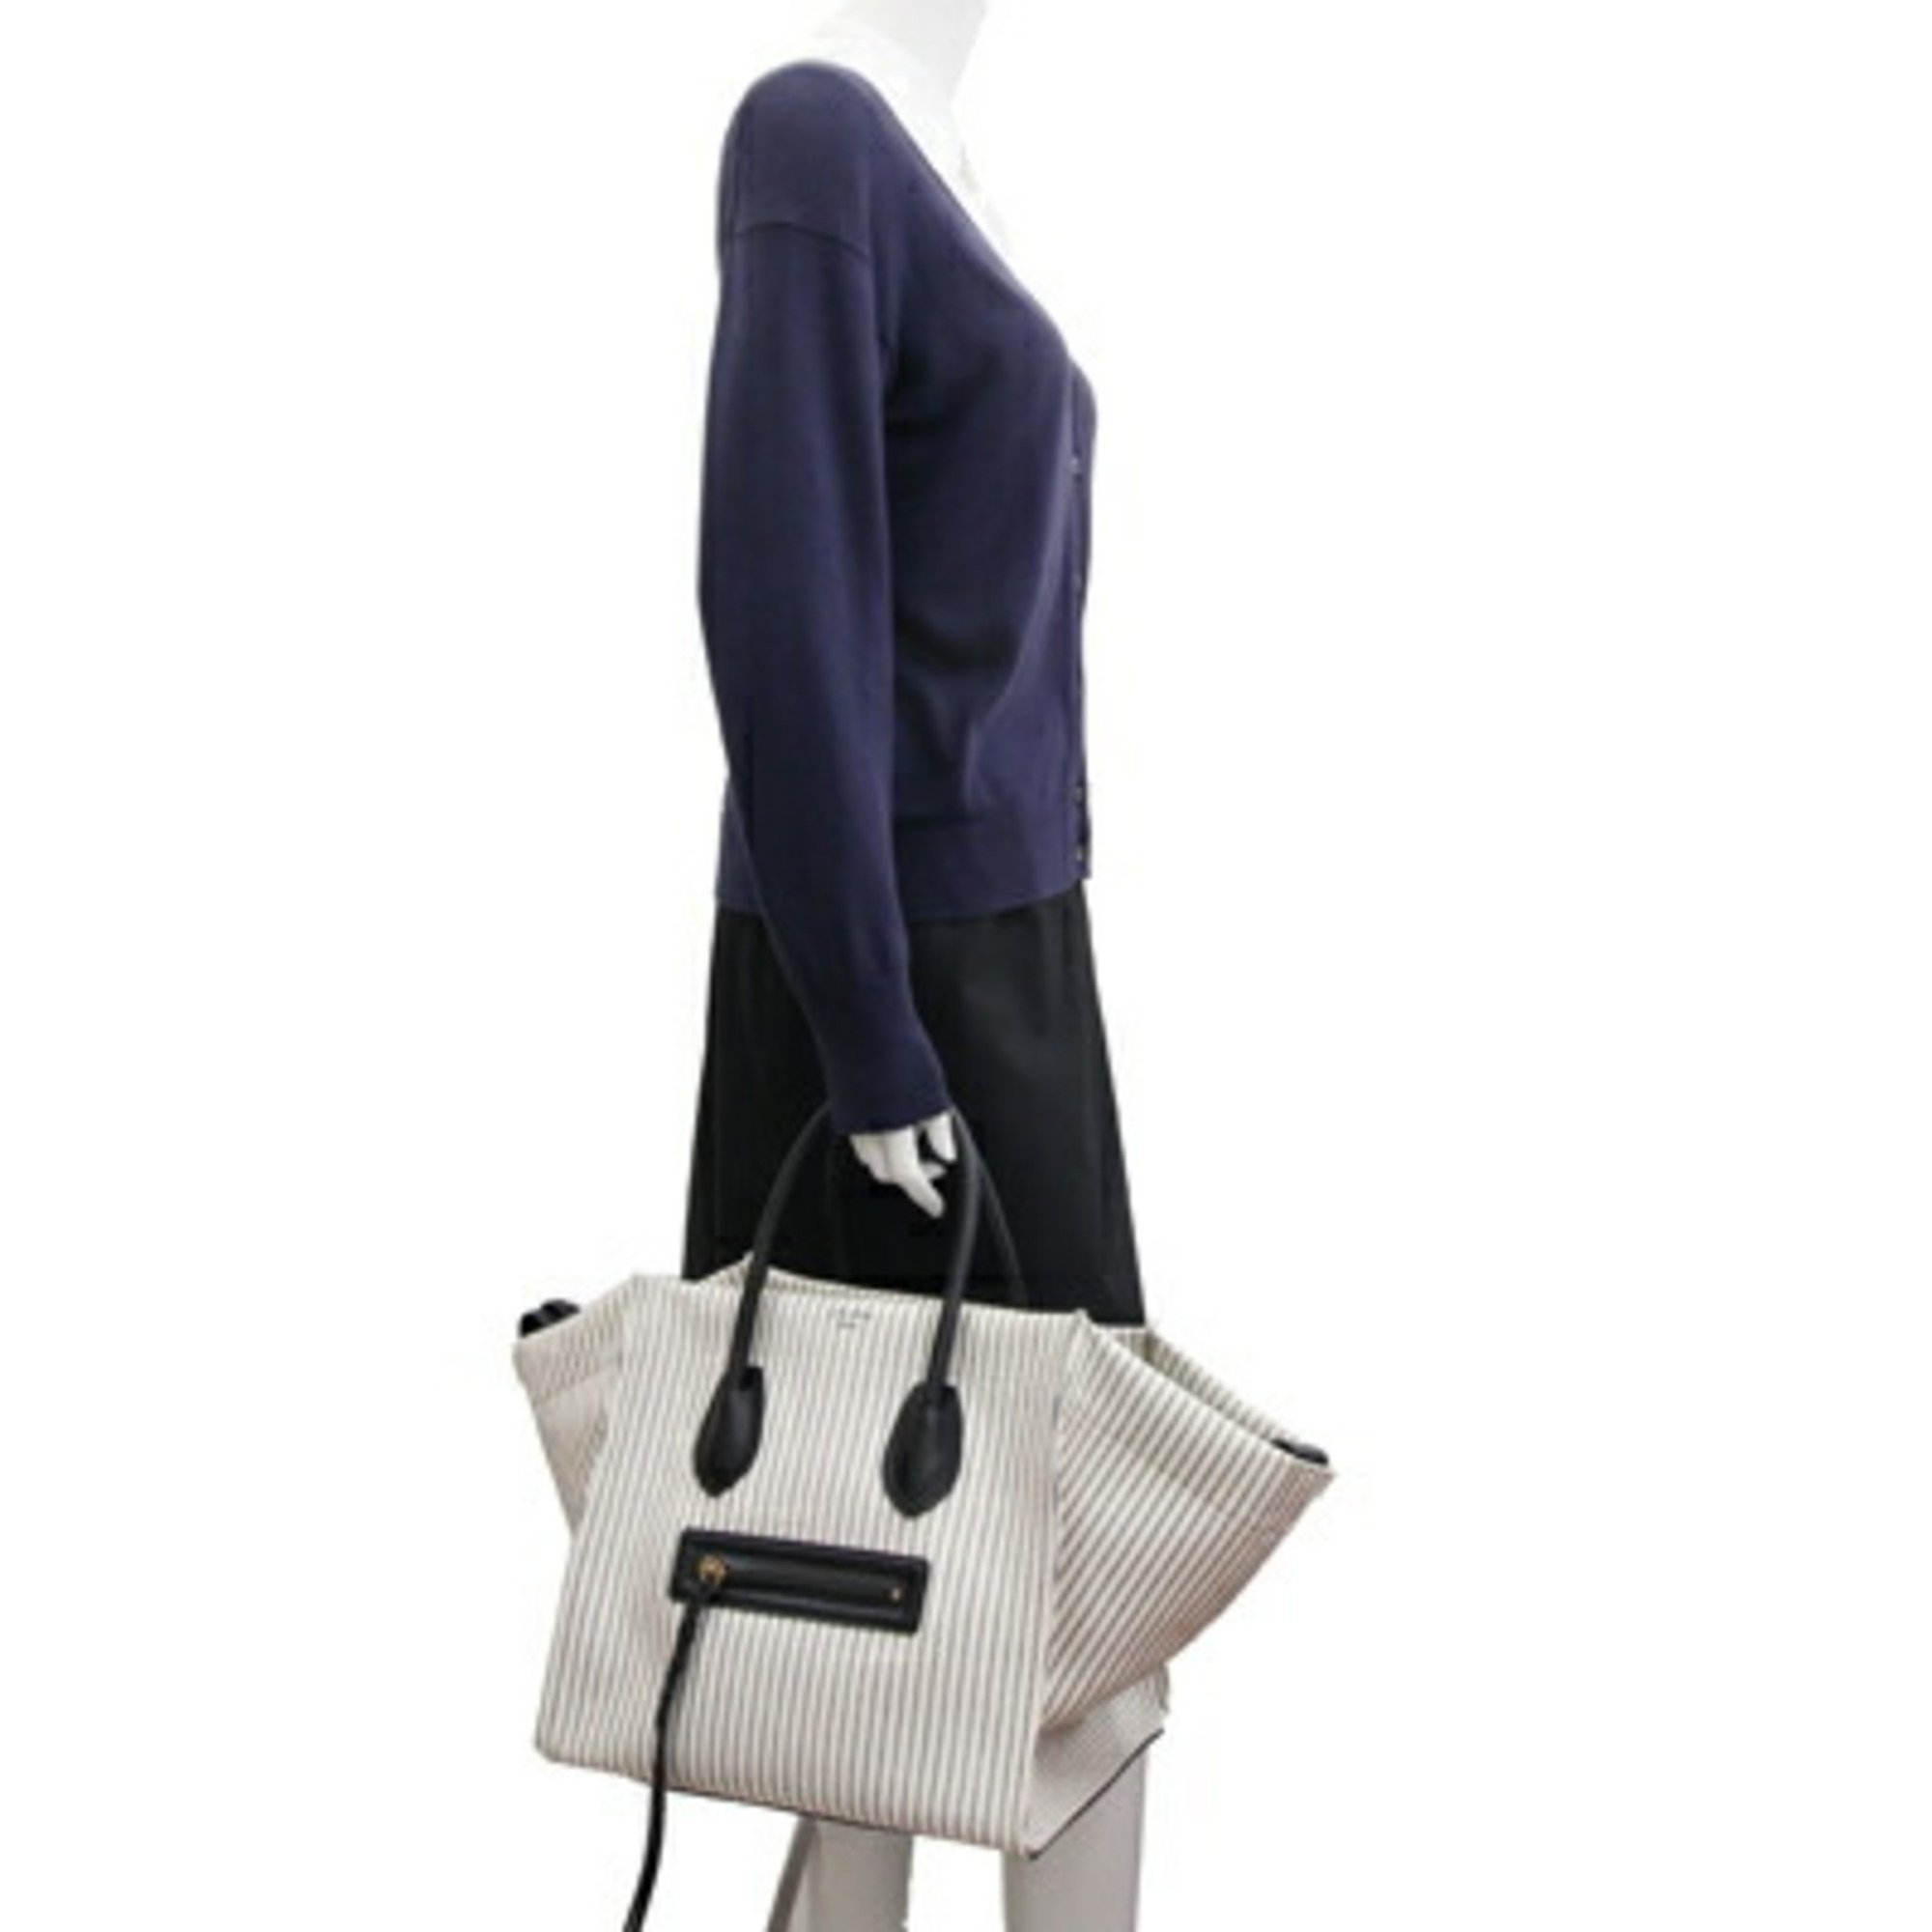 Celine Handbag Luggage Phantom 169952 Ivory Black Canvas Leather Tote Bag Stripe Women's CELINE